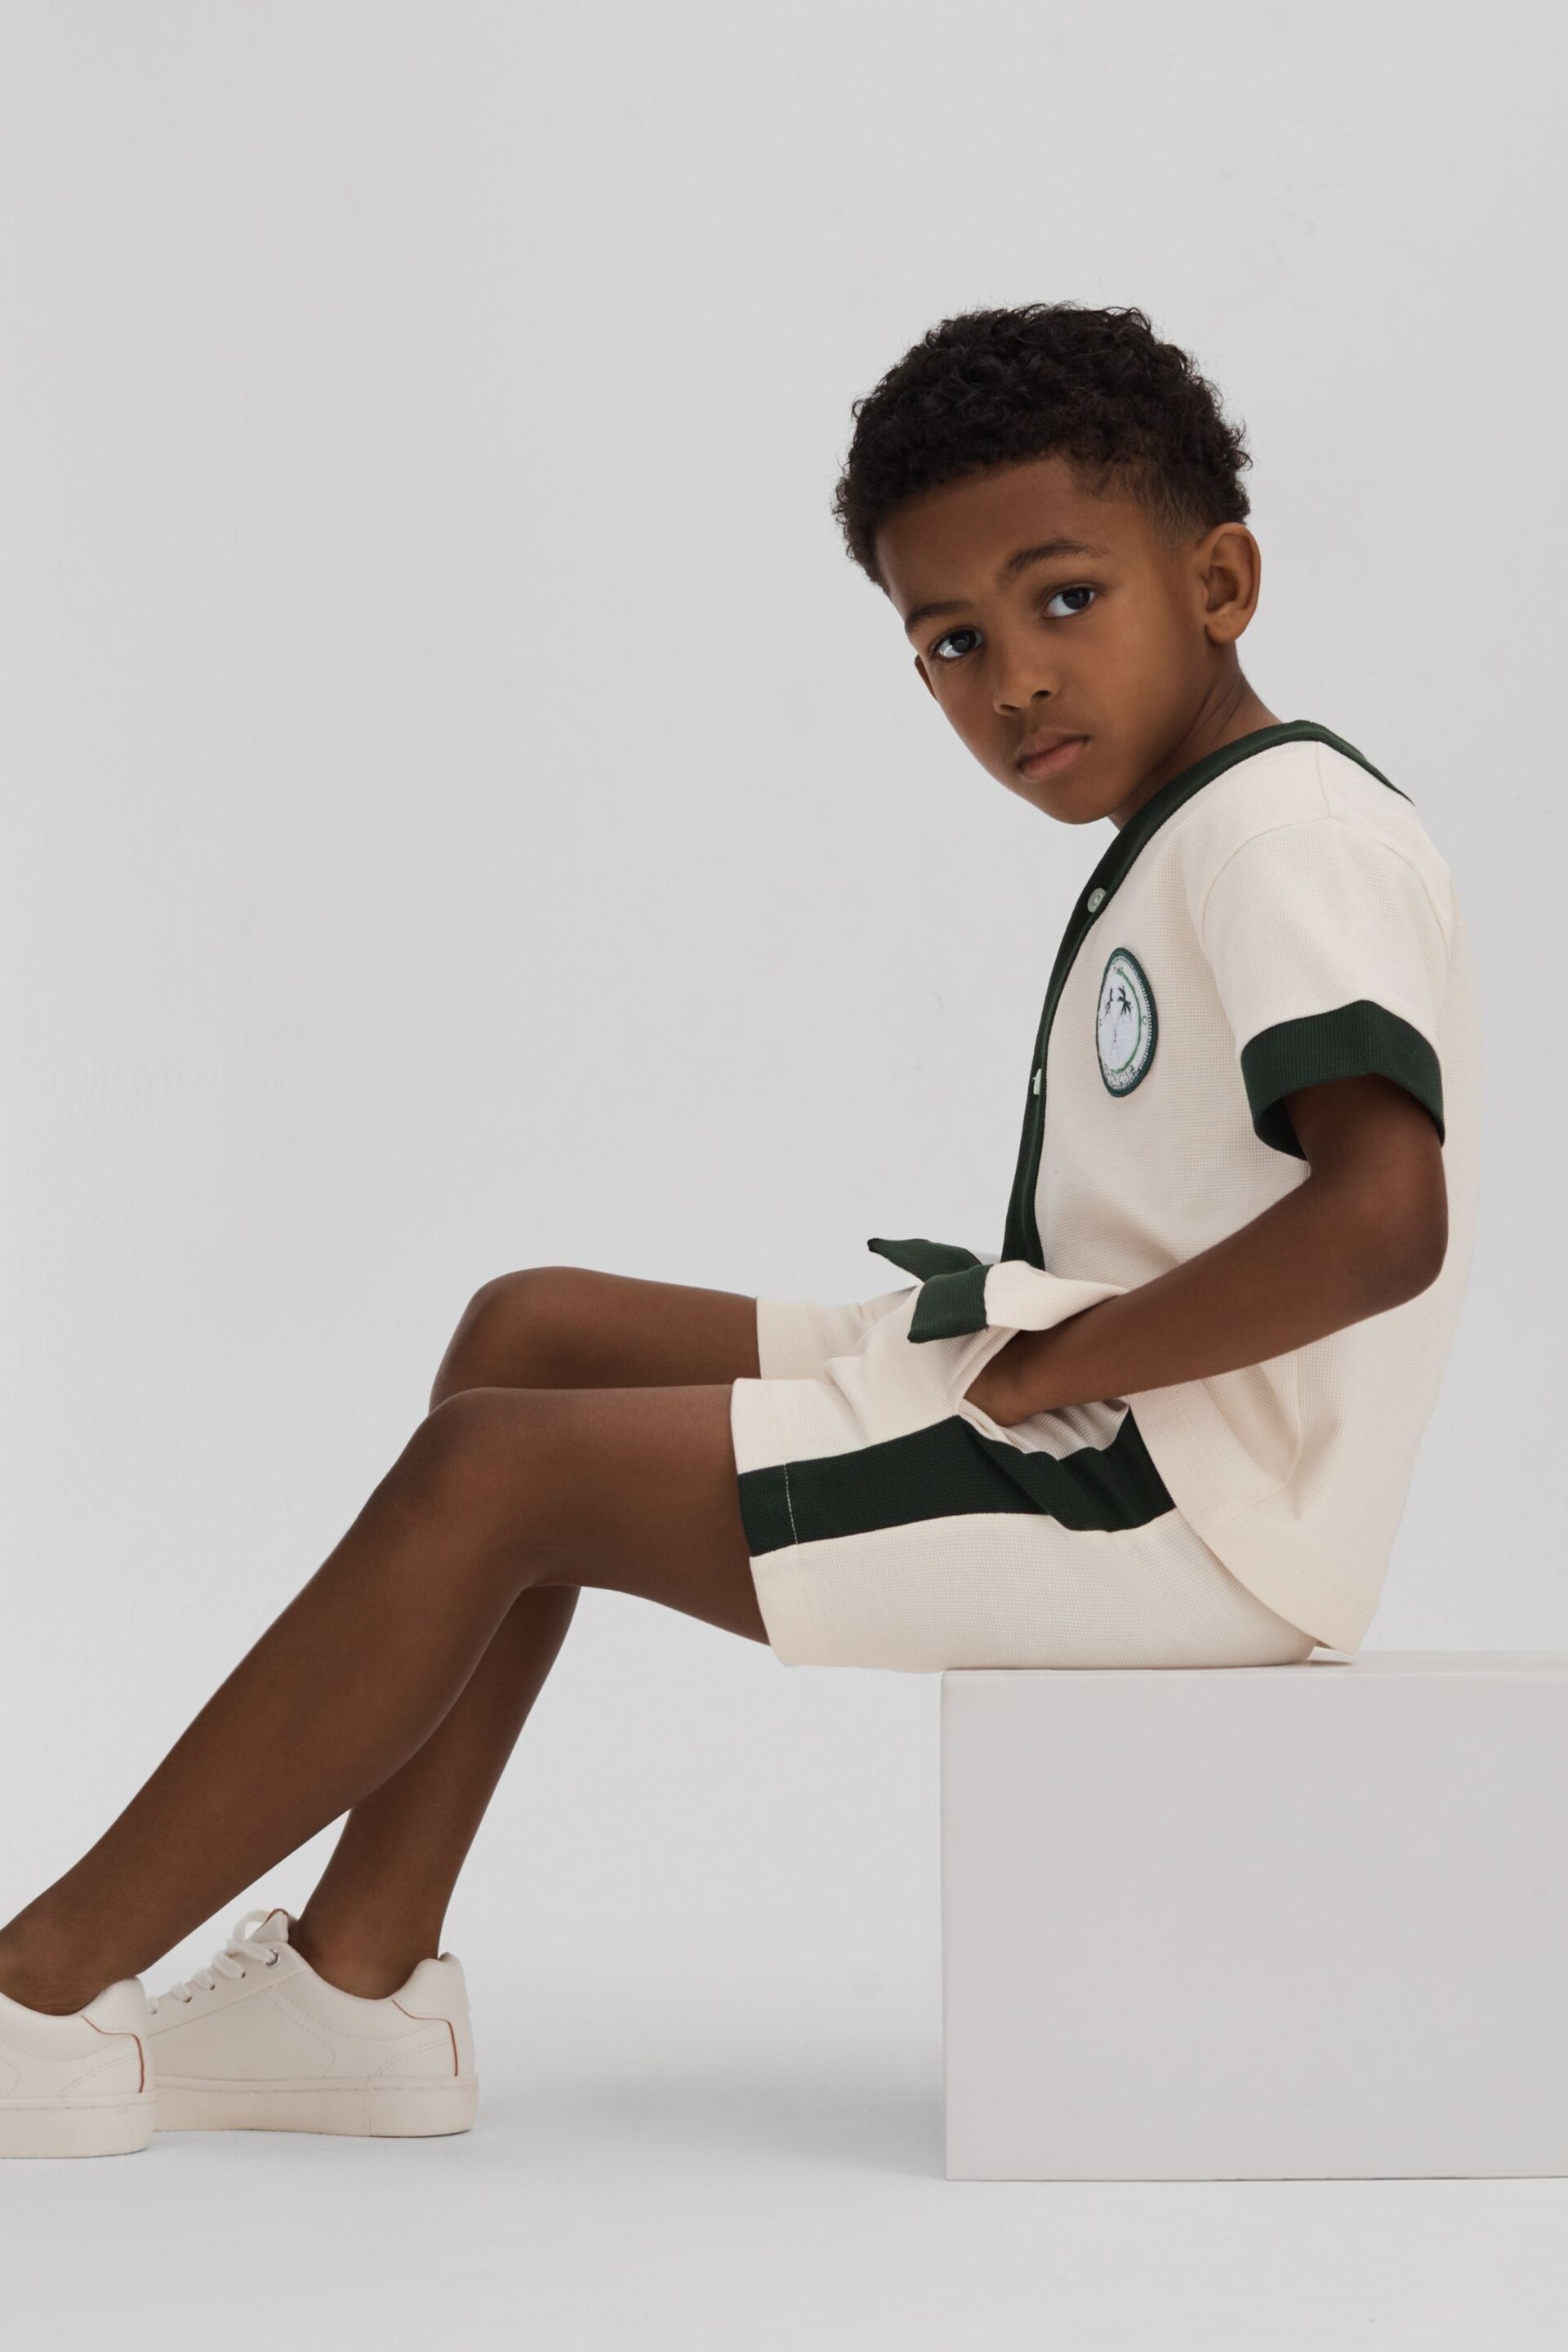 Reiss Ecru/Green Marl Junior Textured Cotton Drawstring Shorts - Image 3 of 4